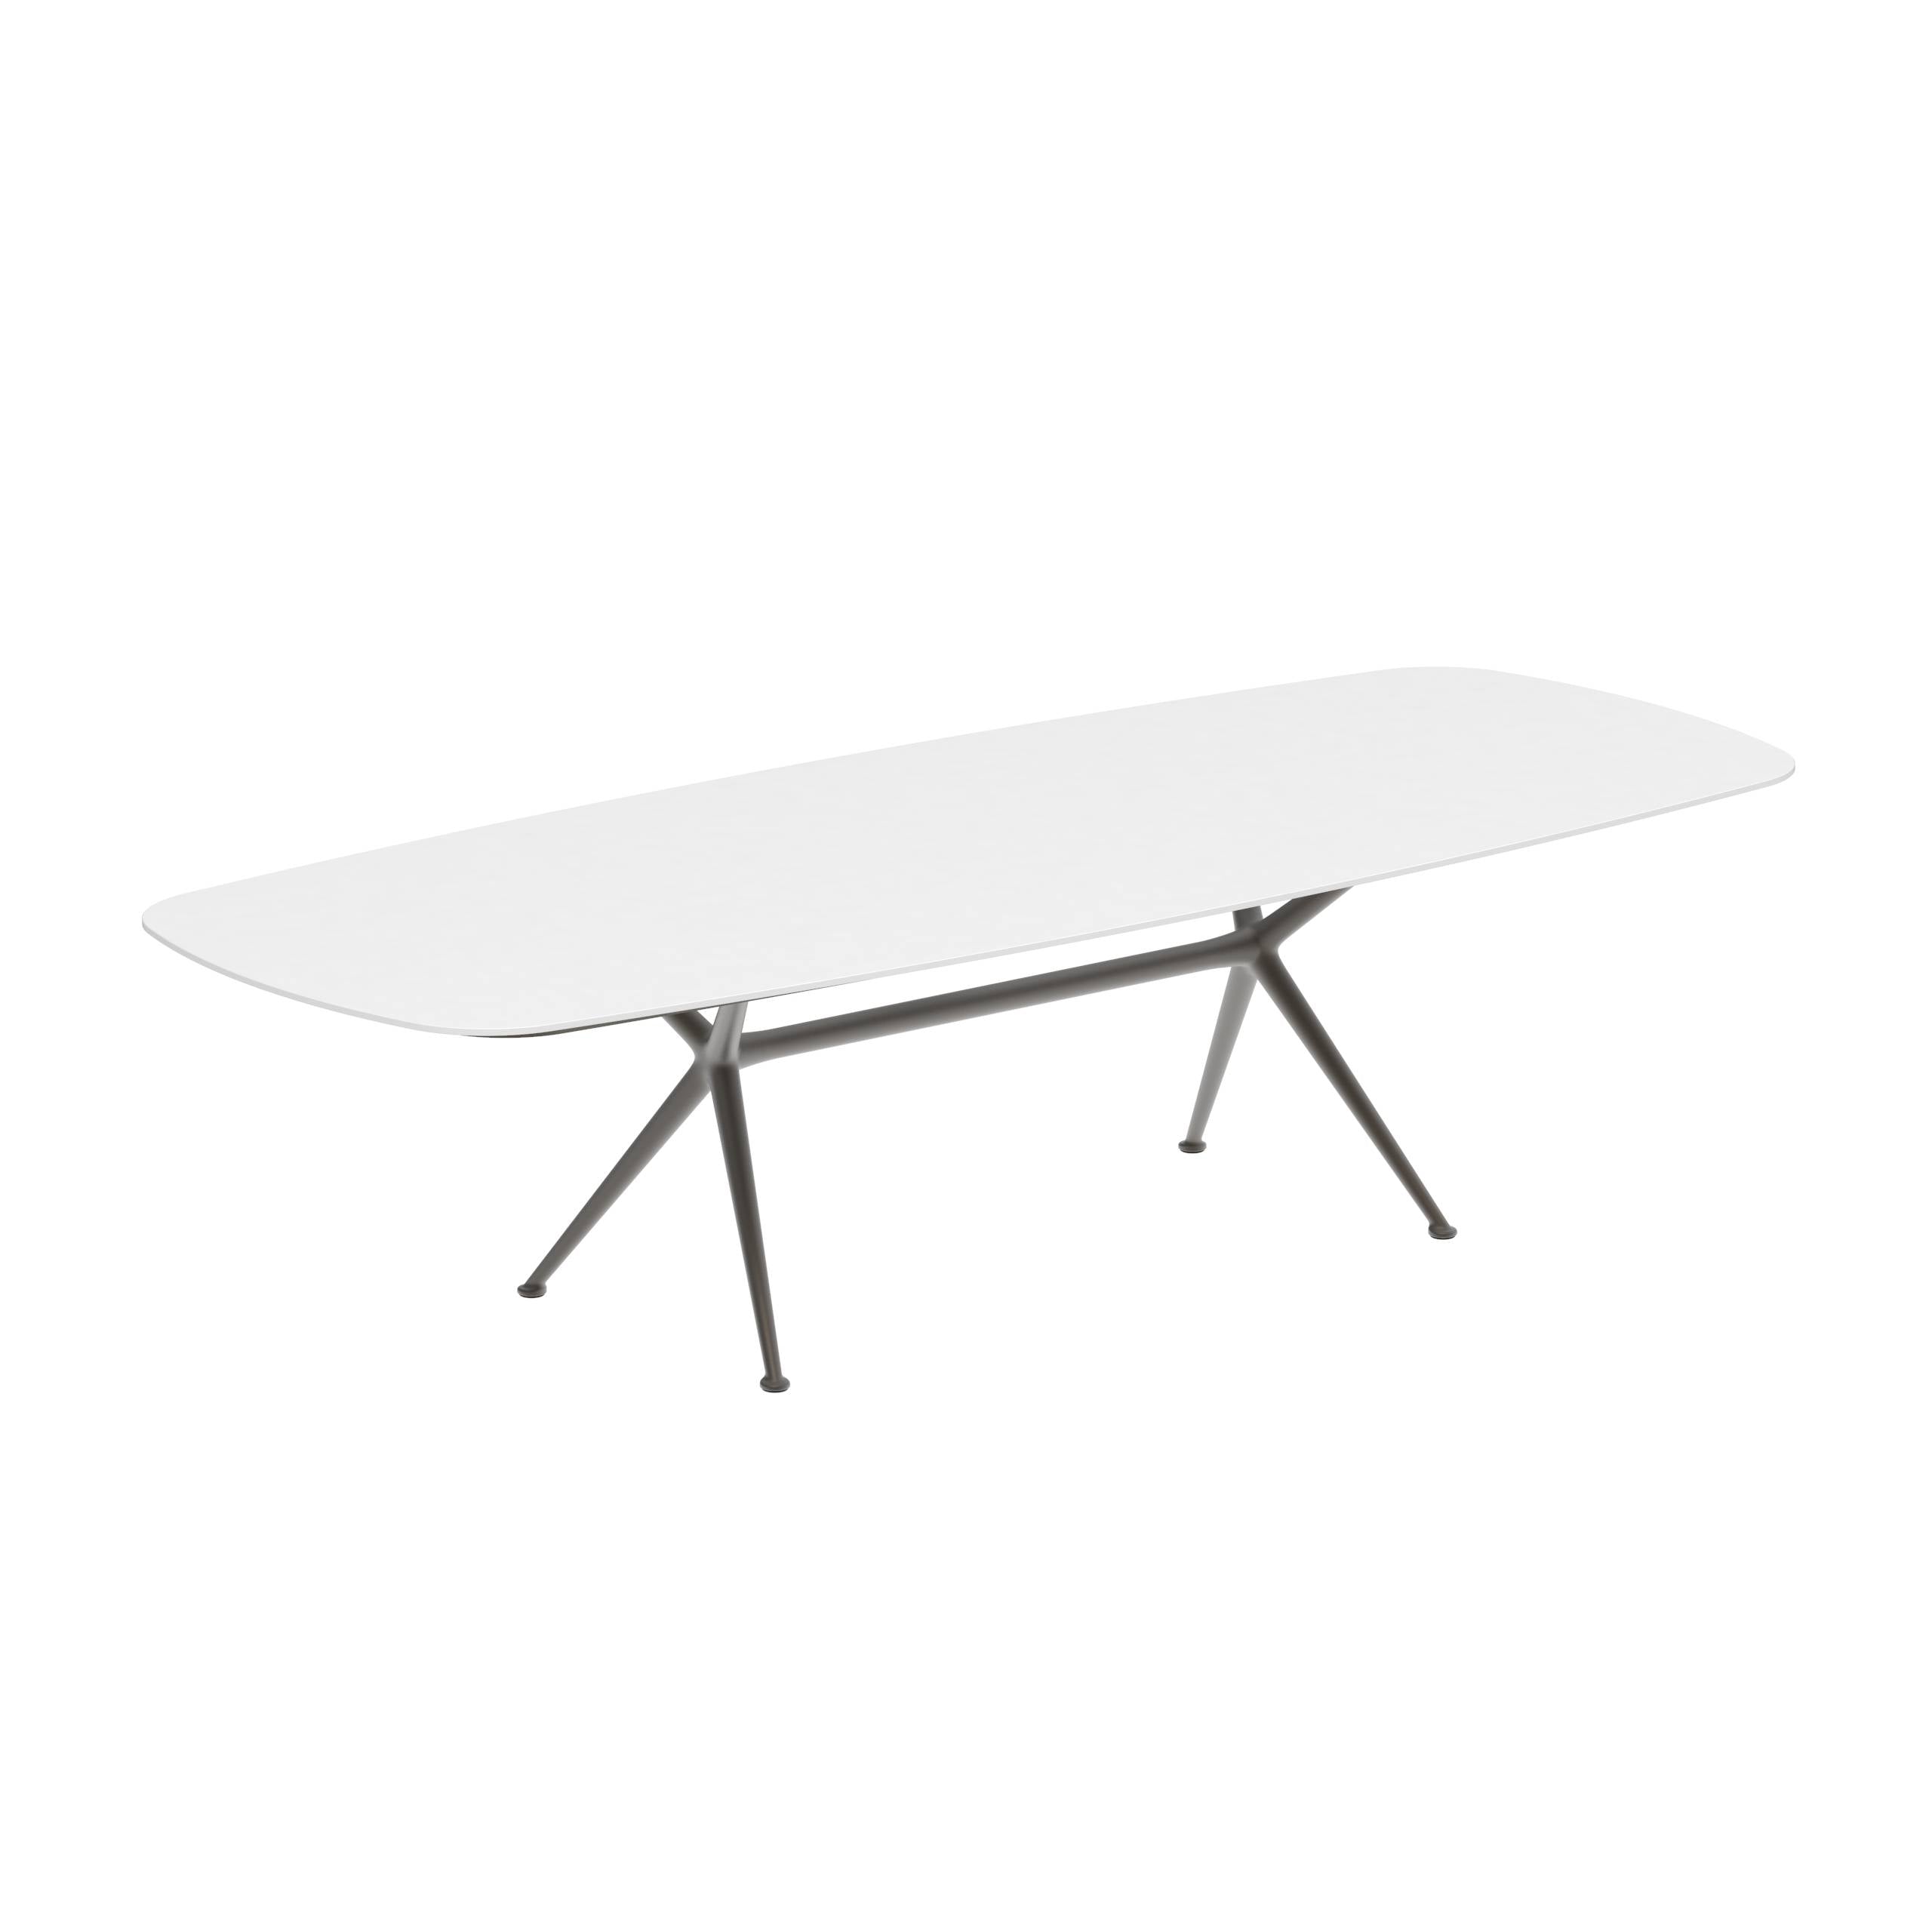 Exes Table 300x120cm Alu Legs Bronze - Table Top Ceramic White